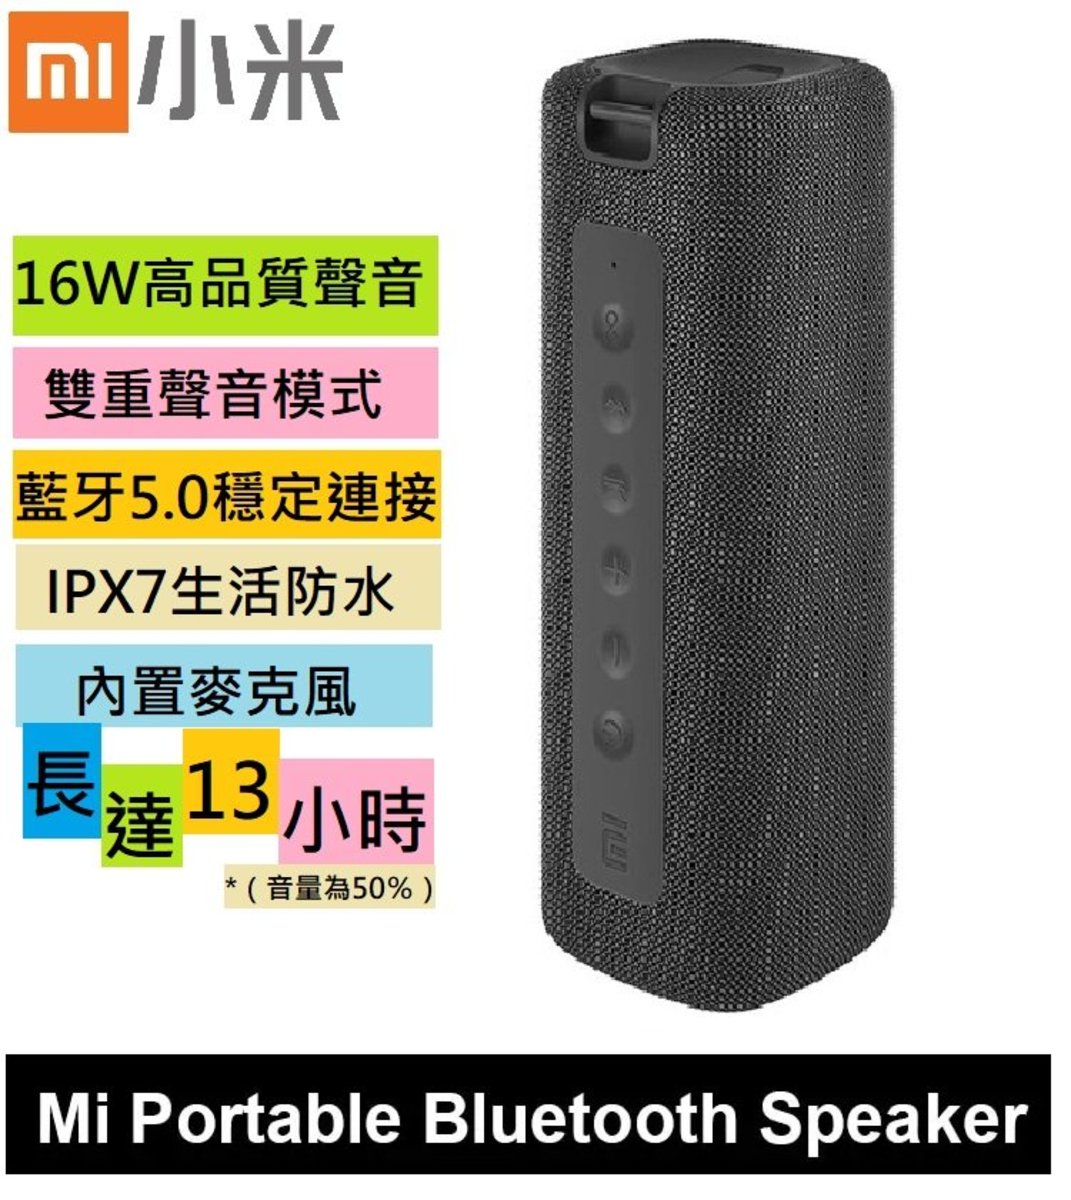 Mi Portable Bluetooth Speaker 16W (QBH4195GL) BLACK  - parallel import